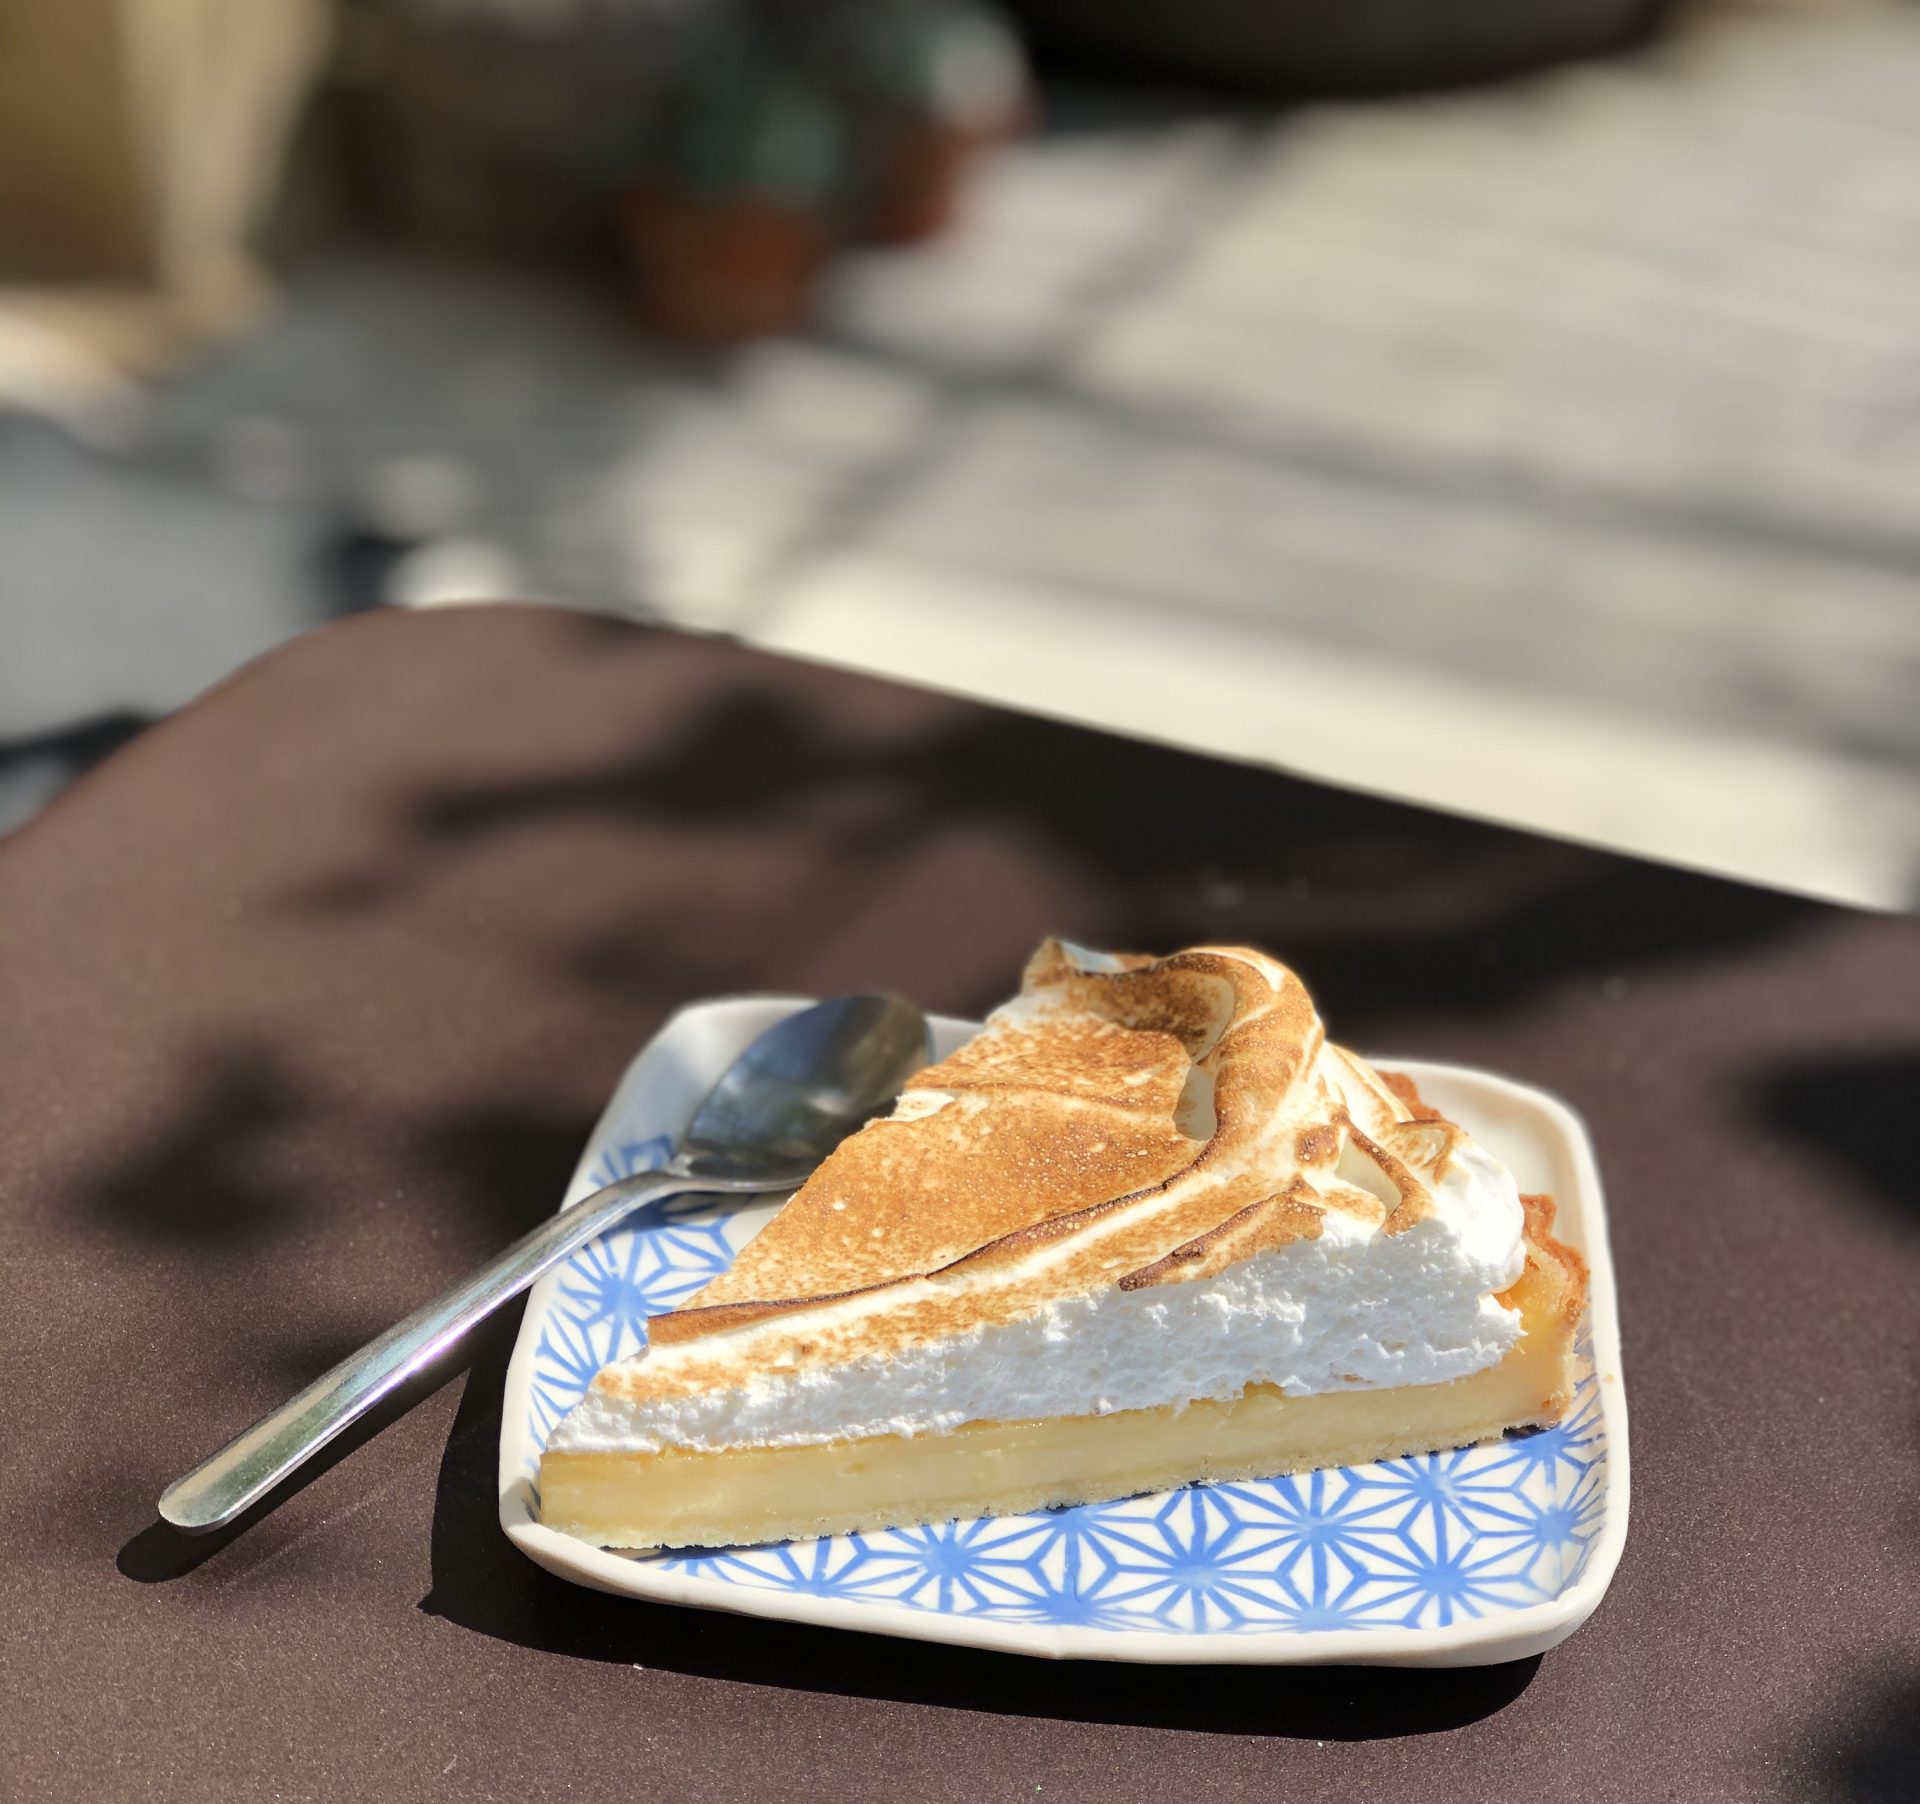 Table d'hôtes dessert Lemon meringue tart